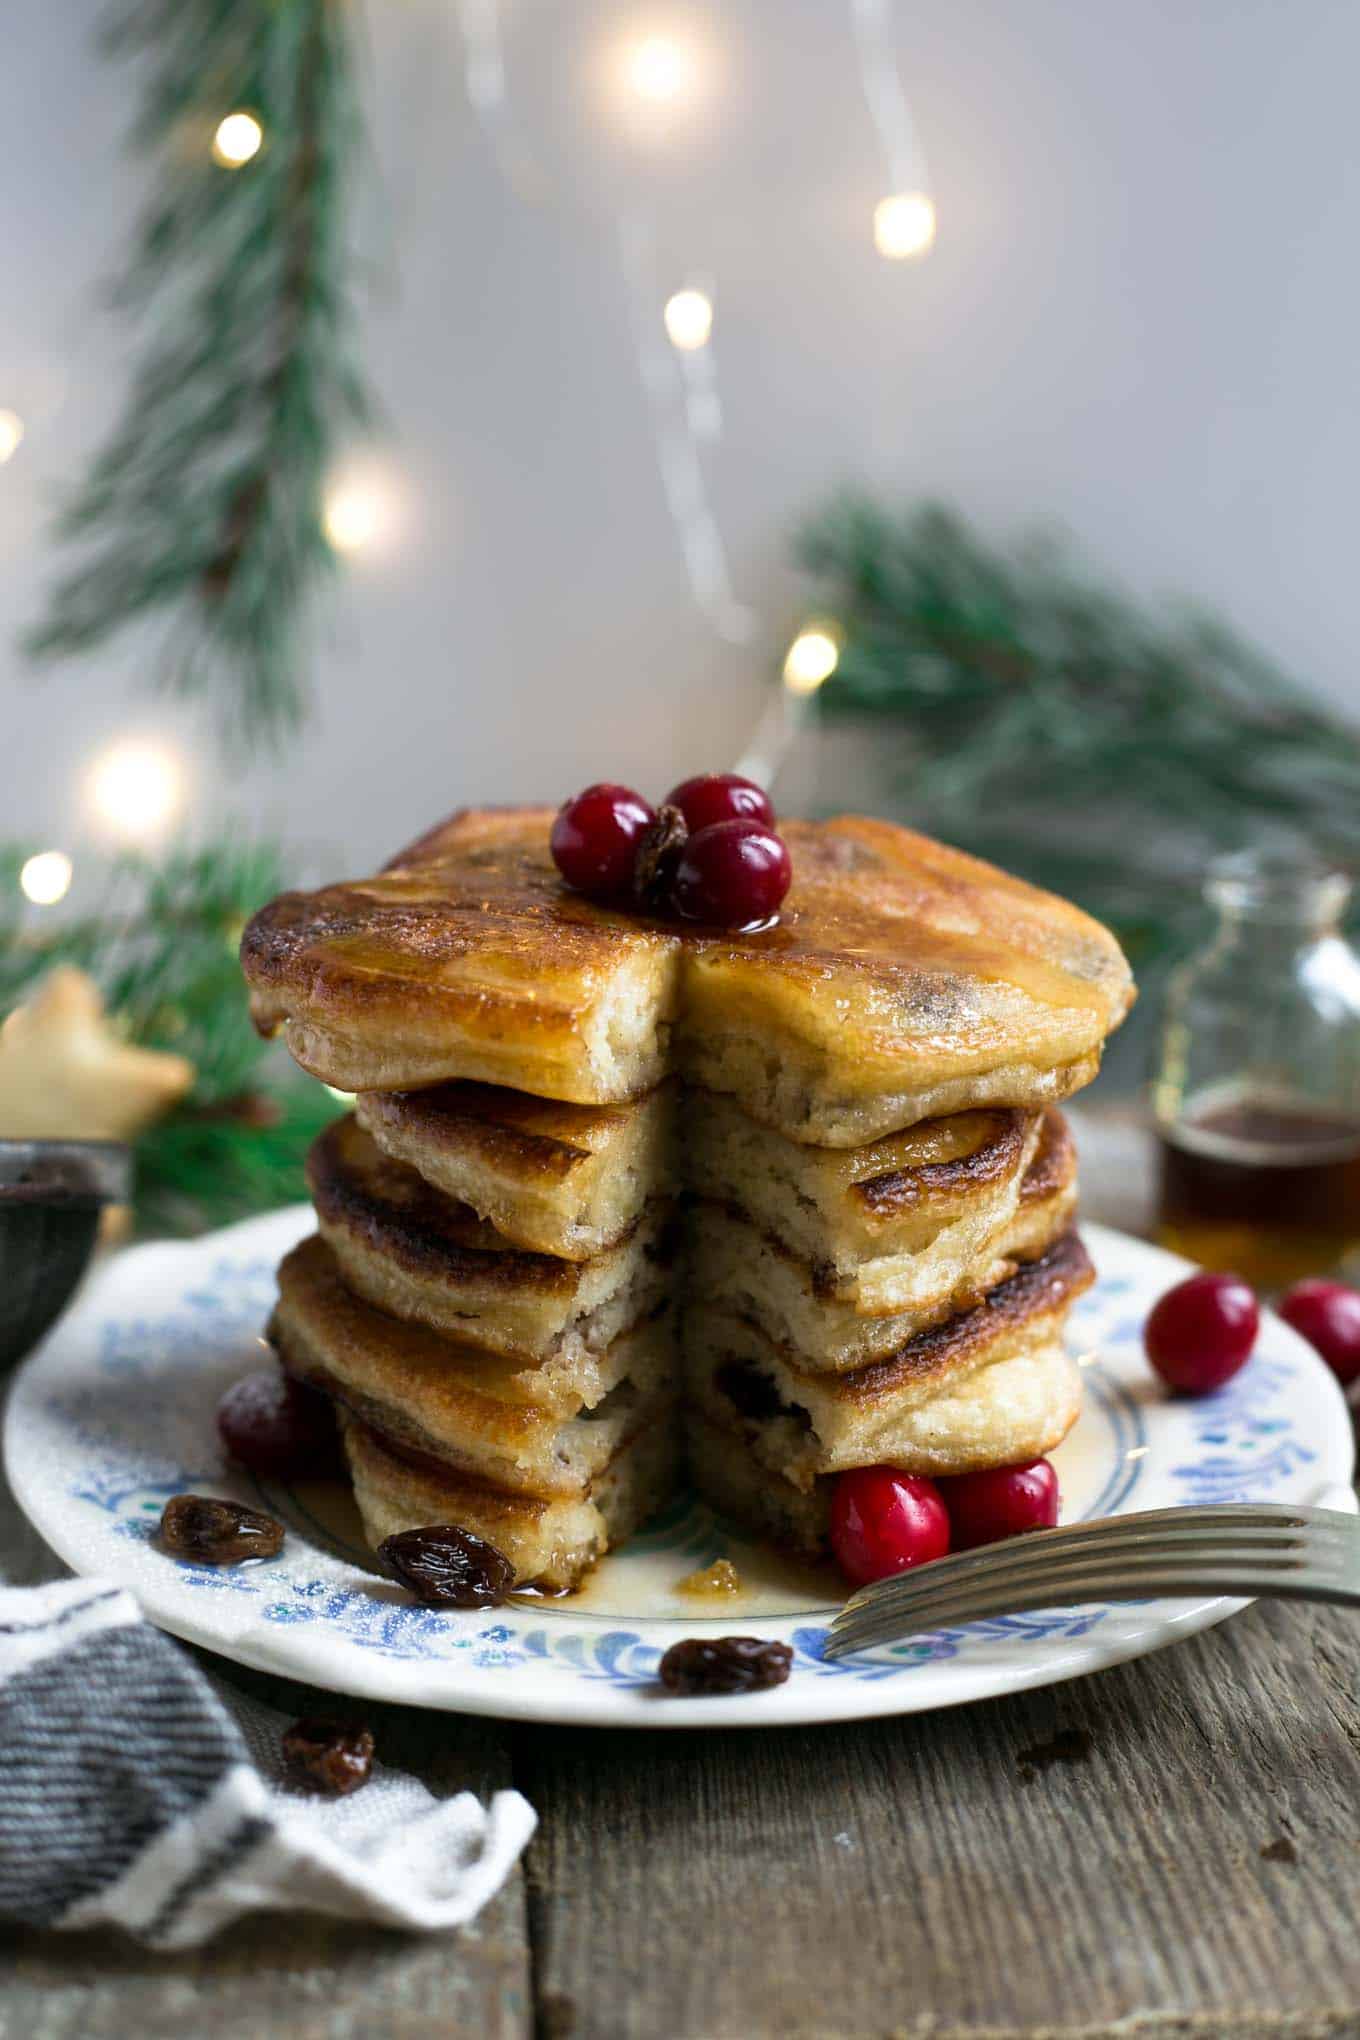 The fluffiest pancakes stuffed with boozy raisins soaked in dark rum! Ultimate #Christmas breakfast or brunch! #vegan #pancakes | via @annabanana.co